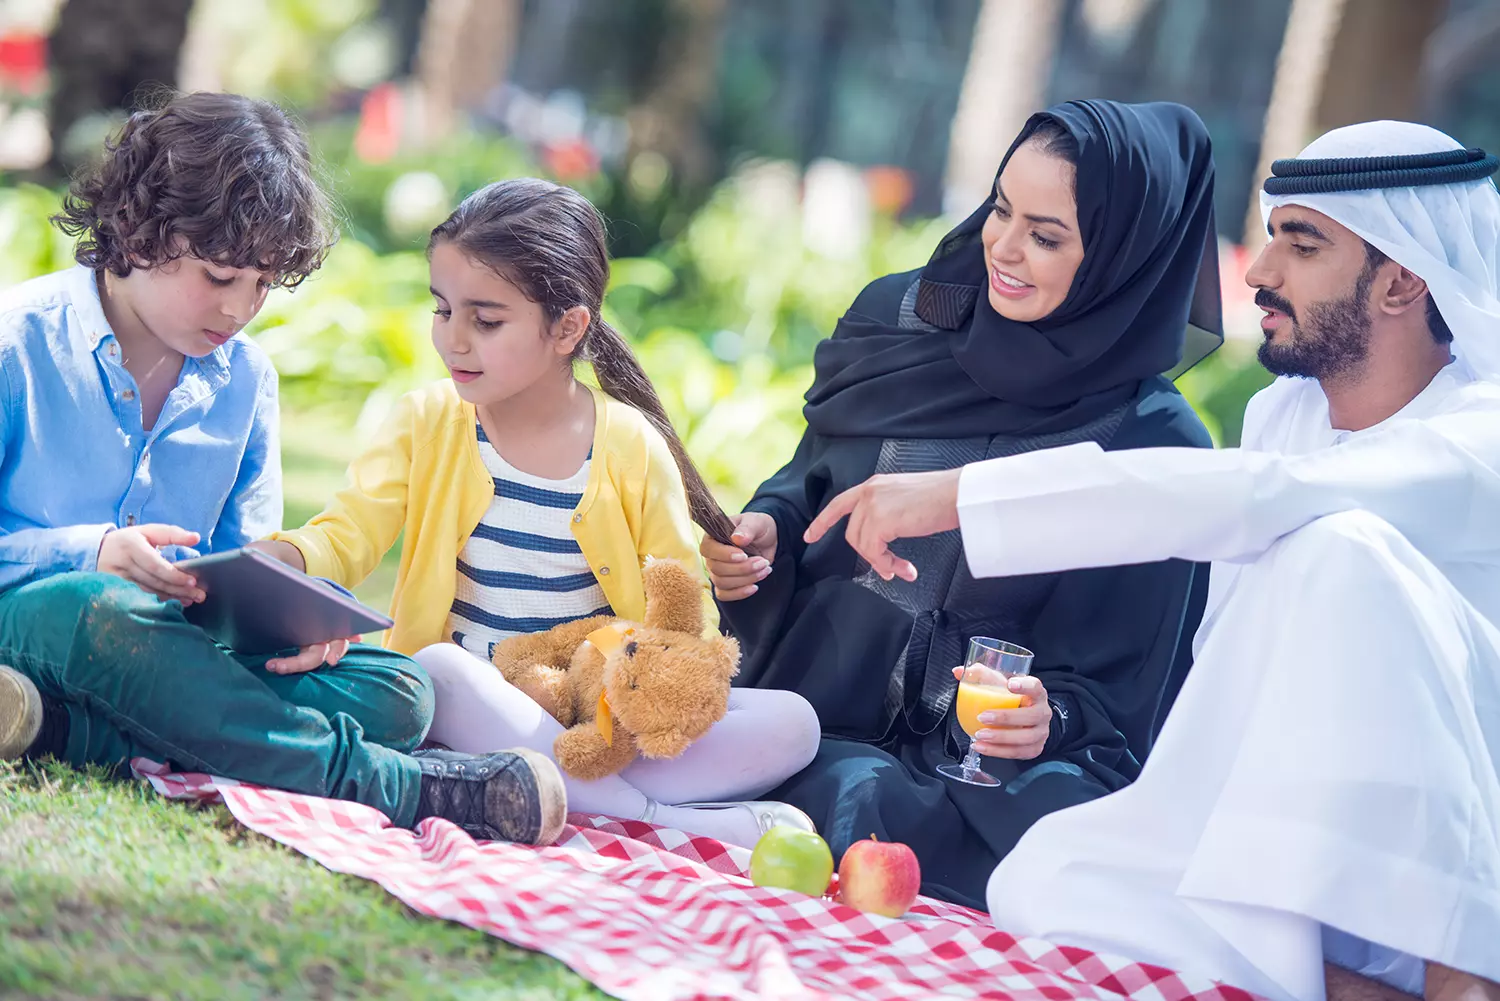 Arab family enjoying a picnic